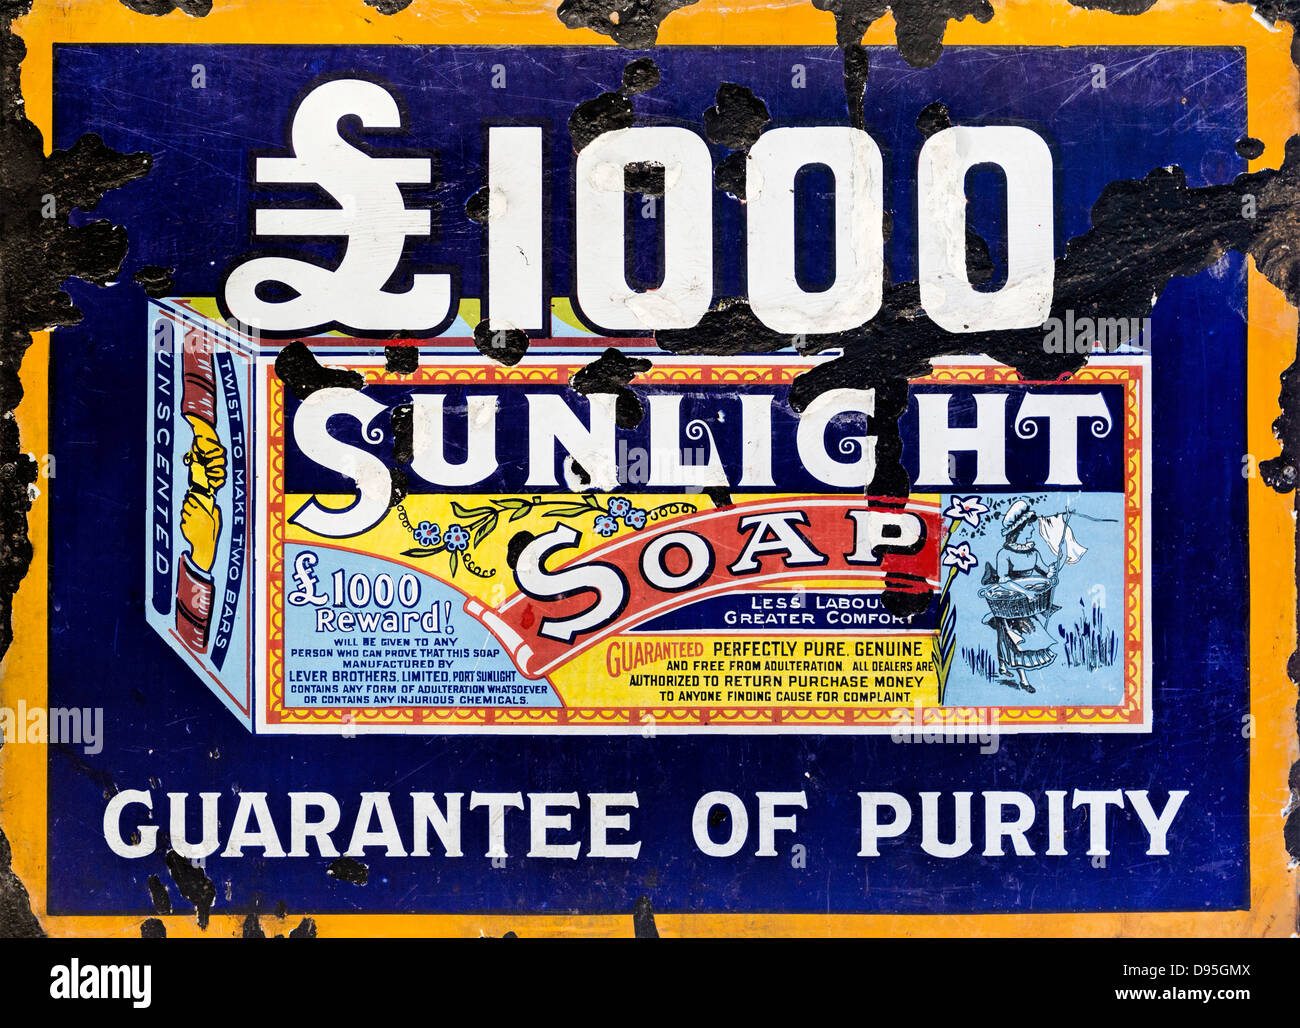 1920's sheet metal enamel sign advertising £1000 Sunlight Soap. Stock Photo